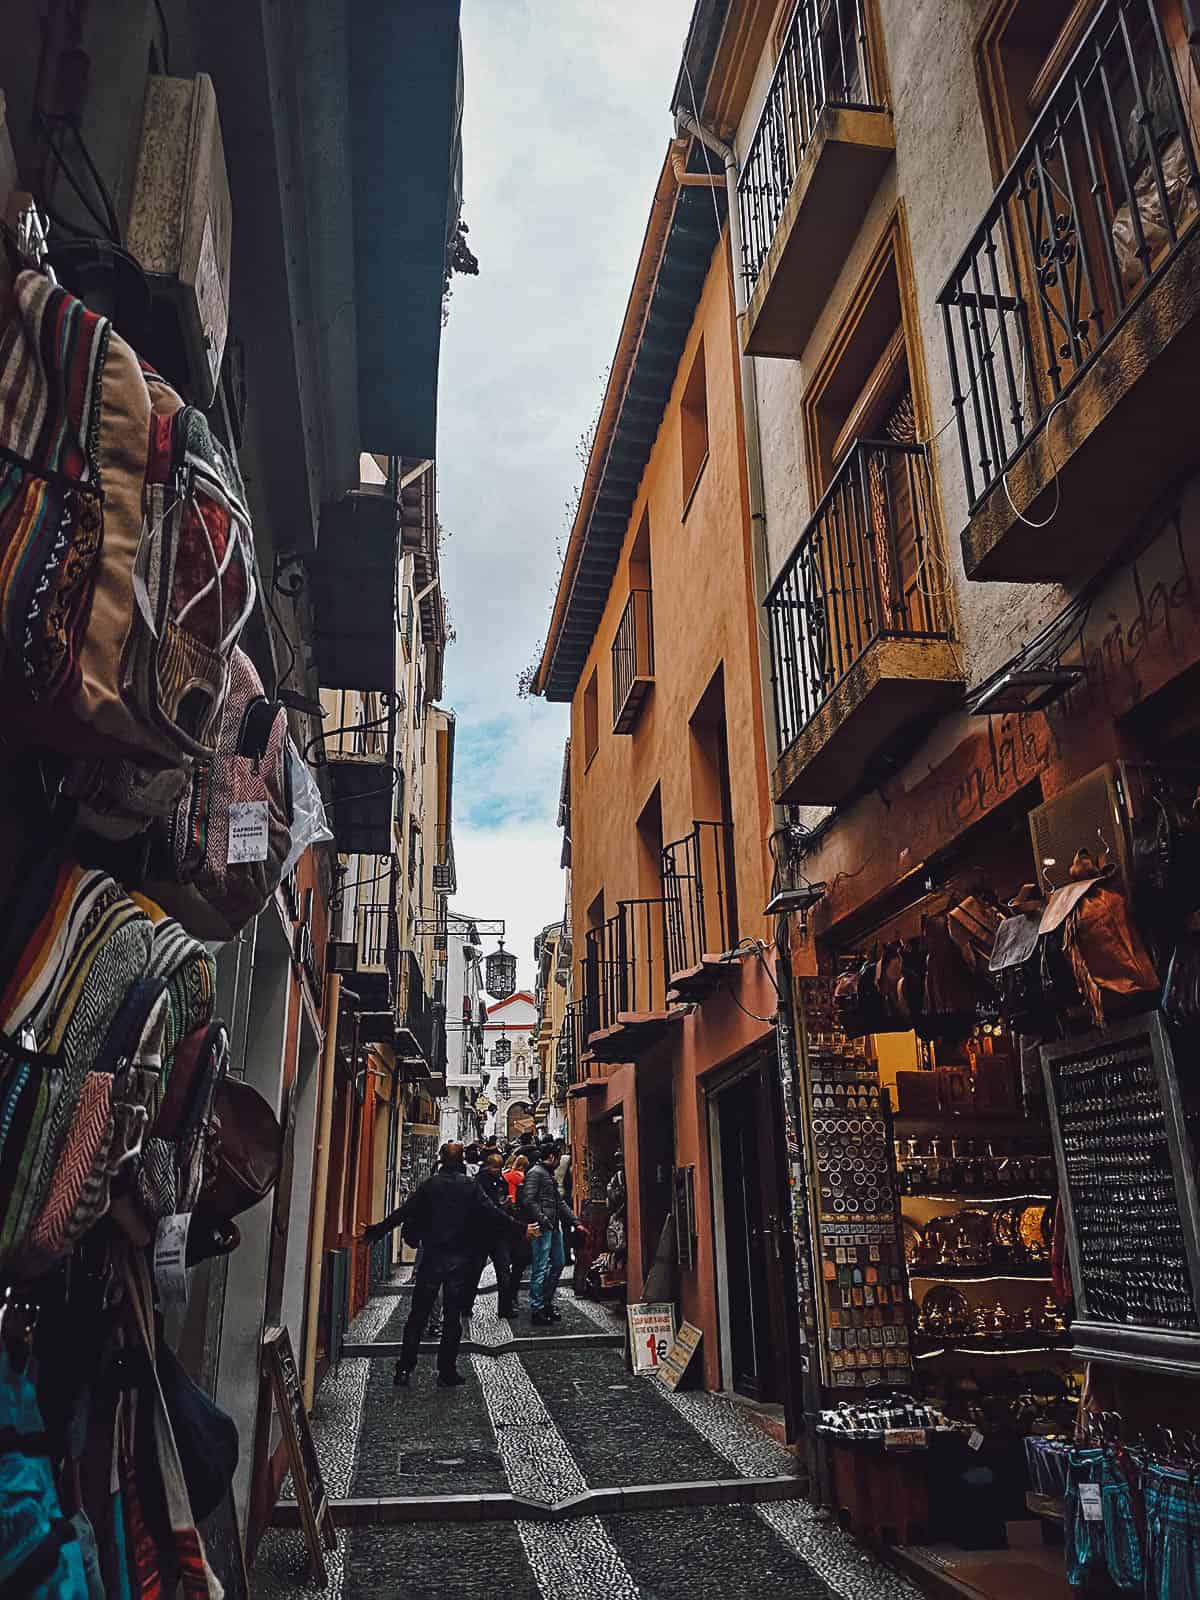 Shops along Calle Elvira in Granada, Spain